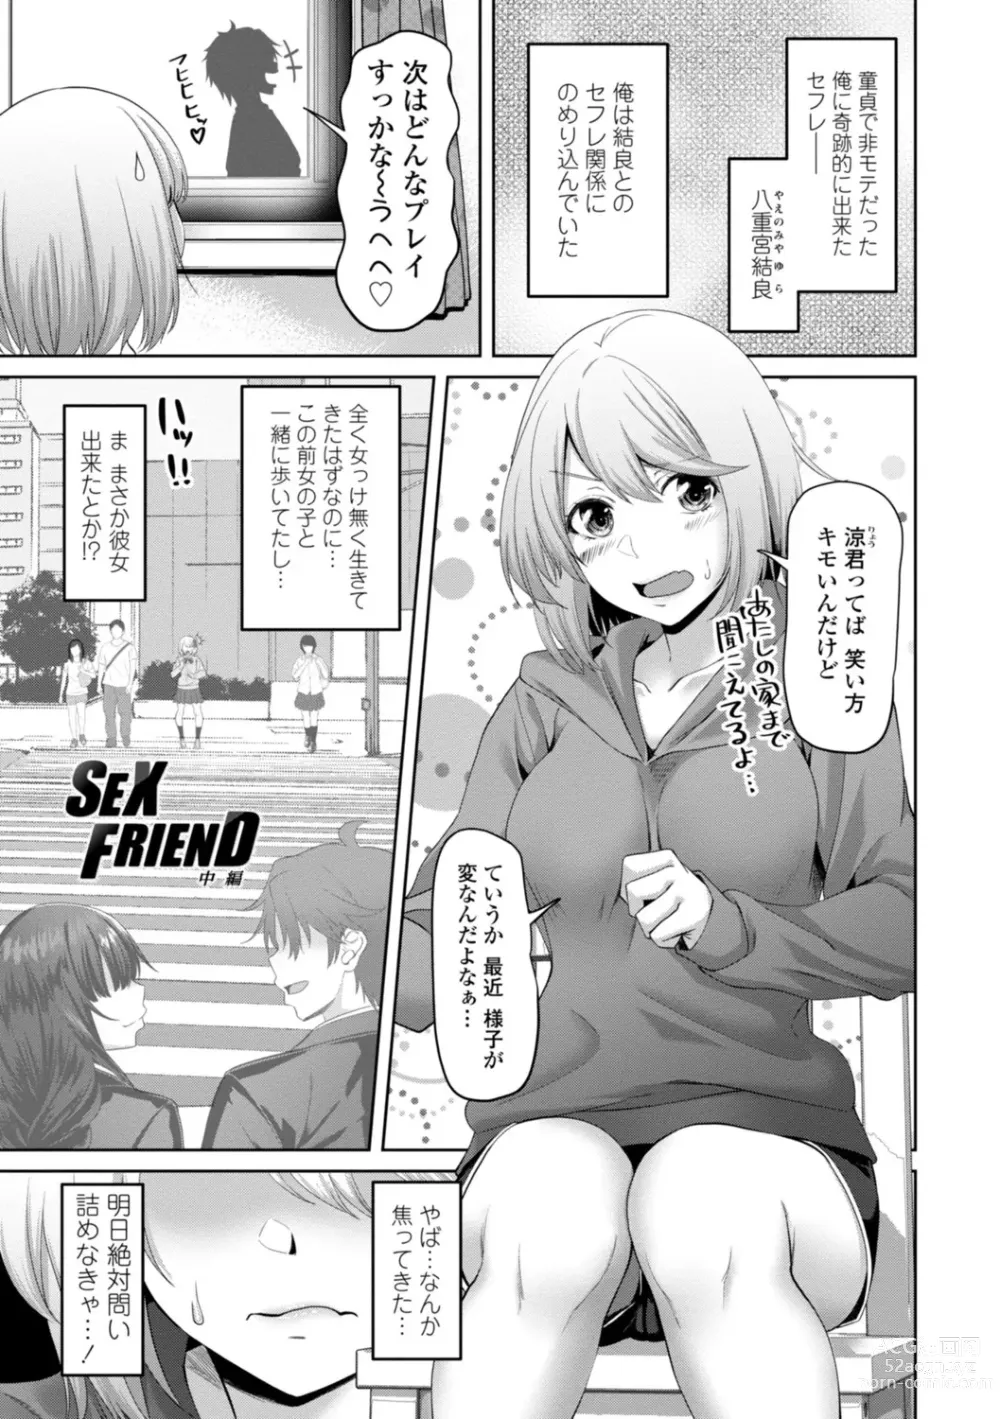 Page 23 of manga Watashi o SeFri ni Shite Minai? - Would you like to try me as a sex friend? + Digital Tokusouban  Tokuten